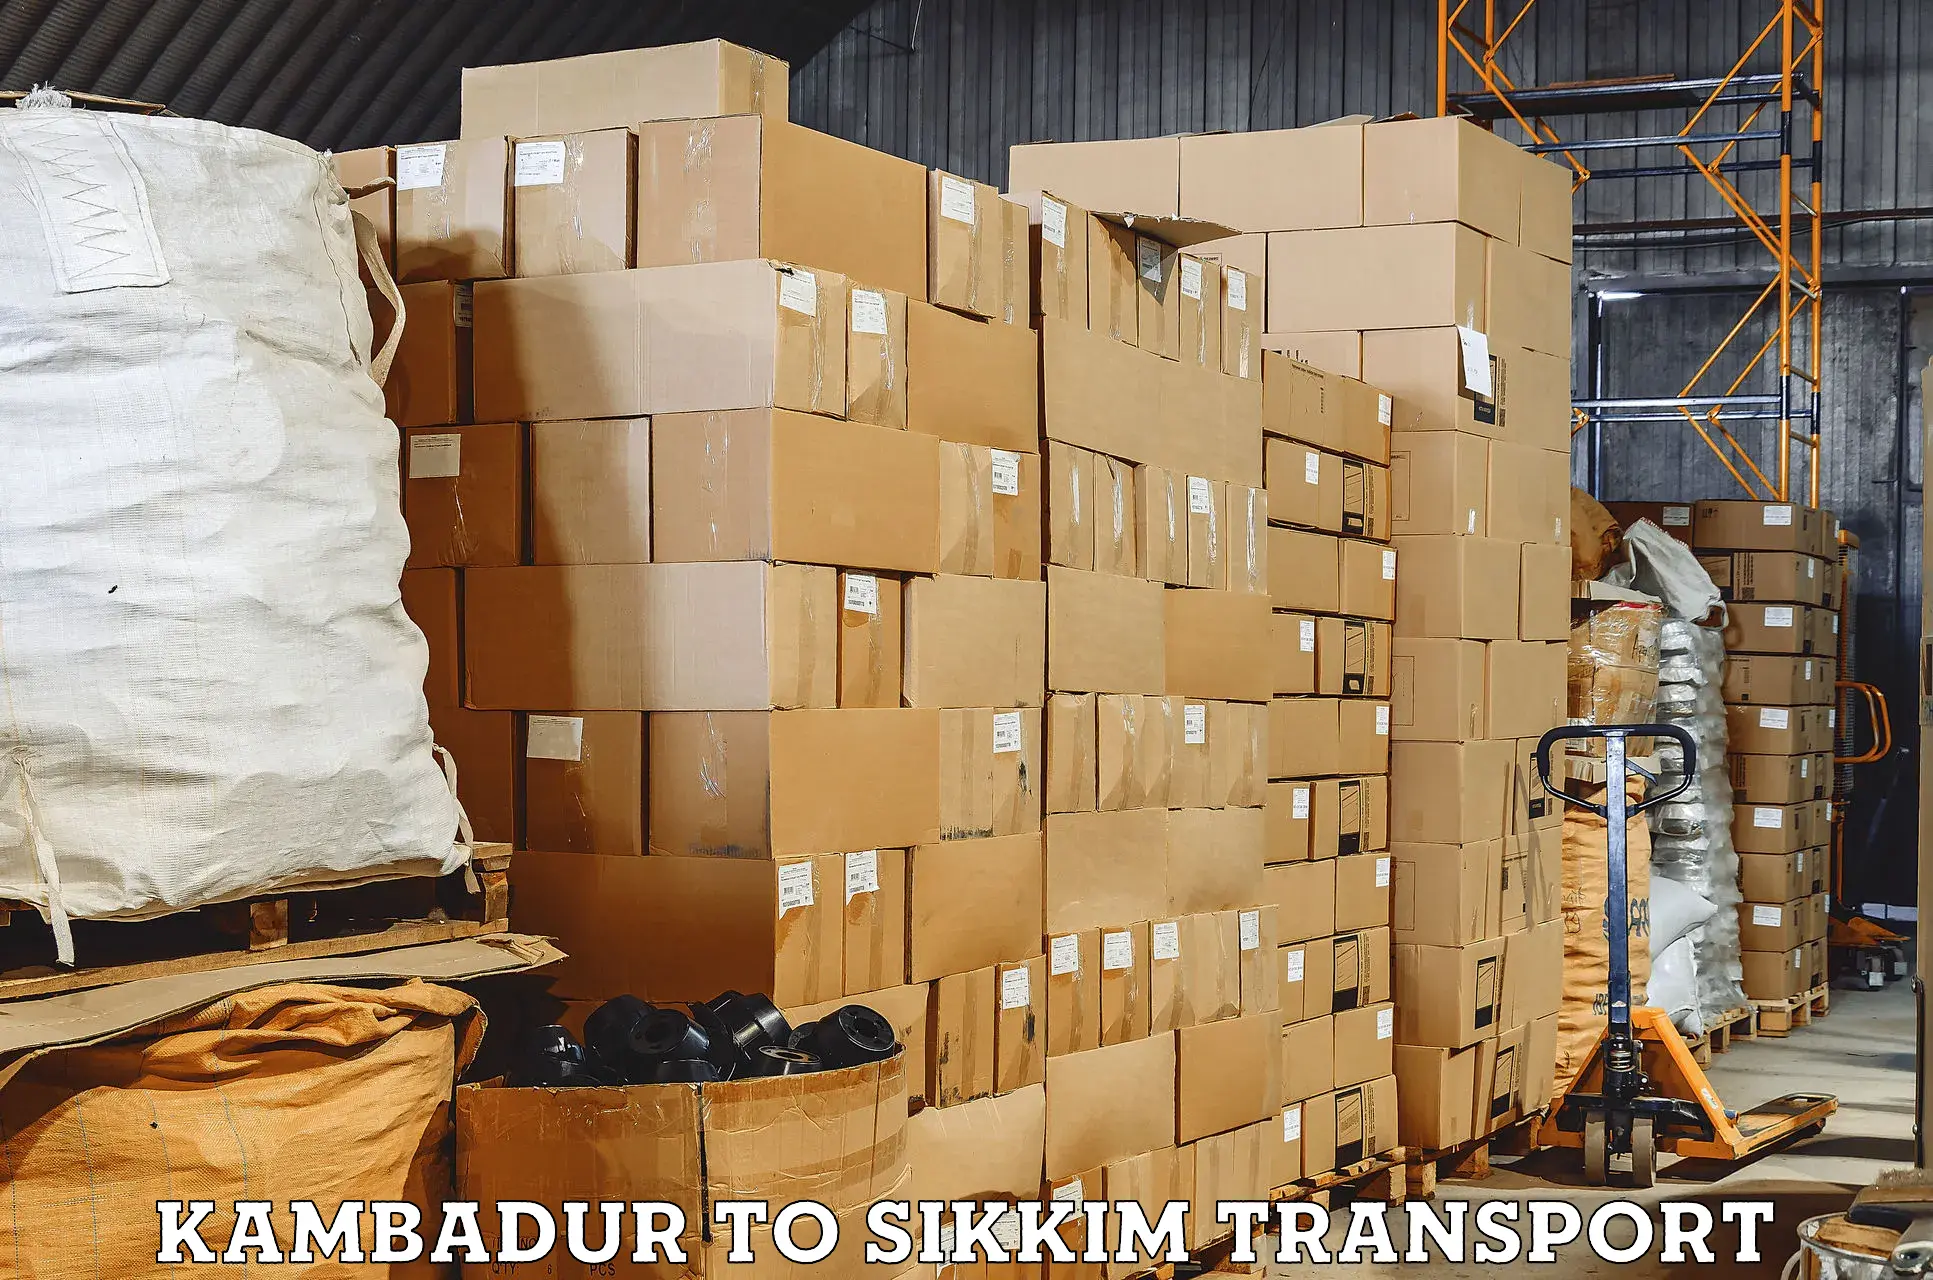 Pick up transport service Kambadur to Pelling